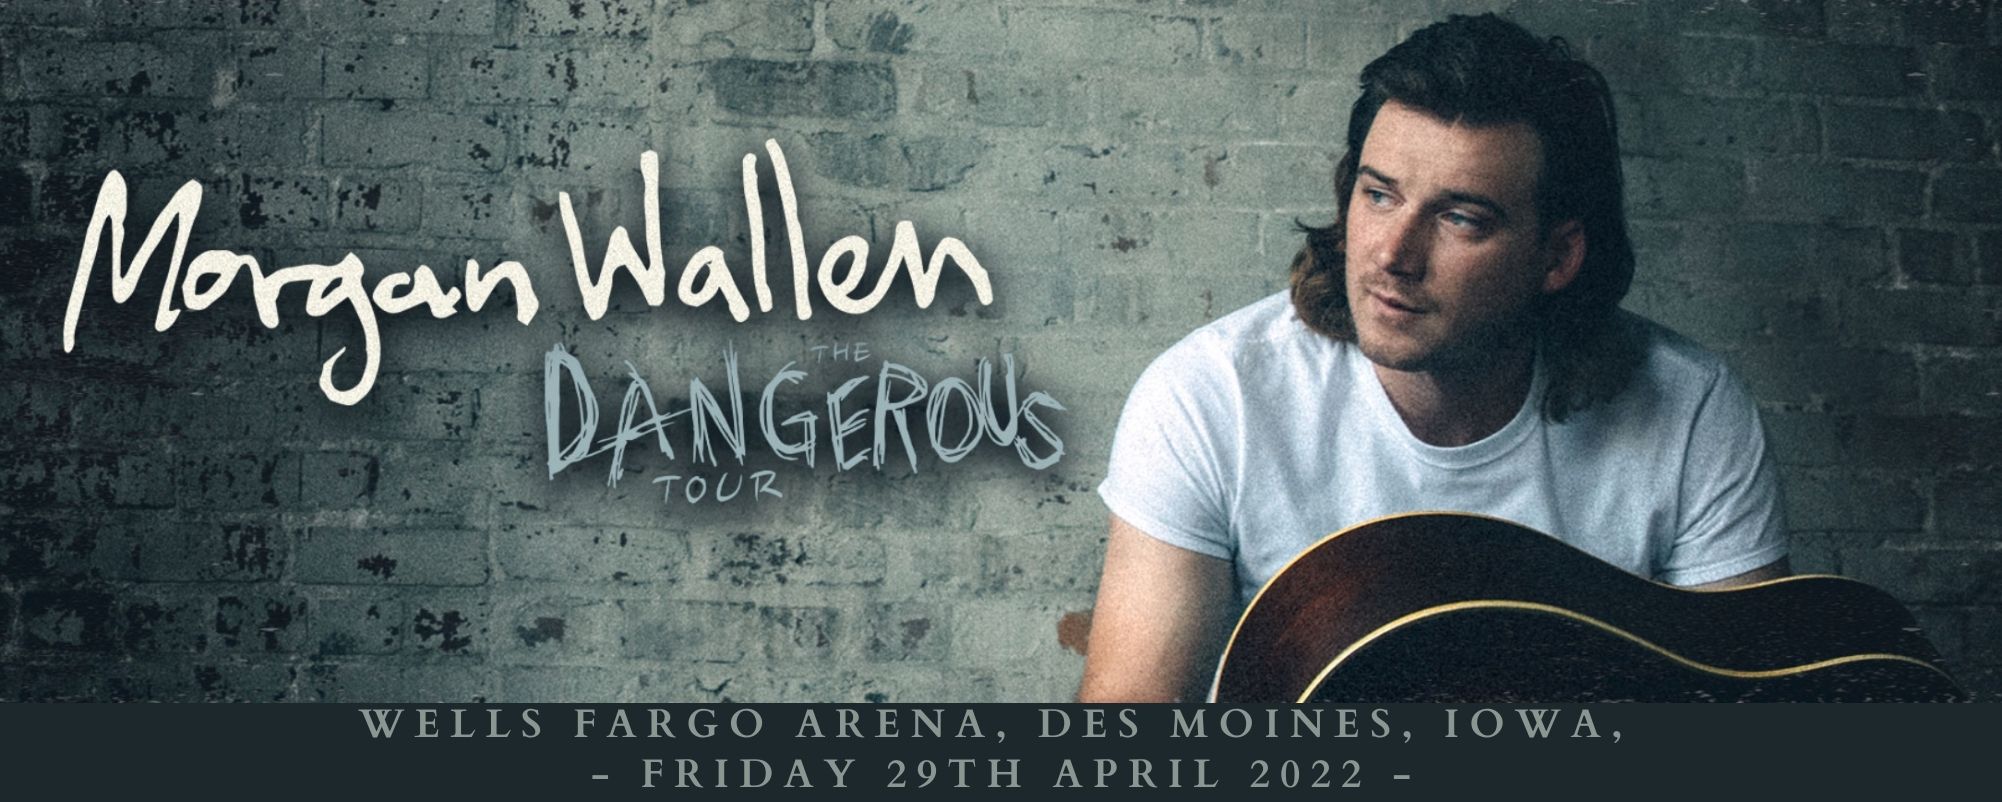 Morgan Wallen at Wells Fargo Arena